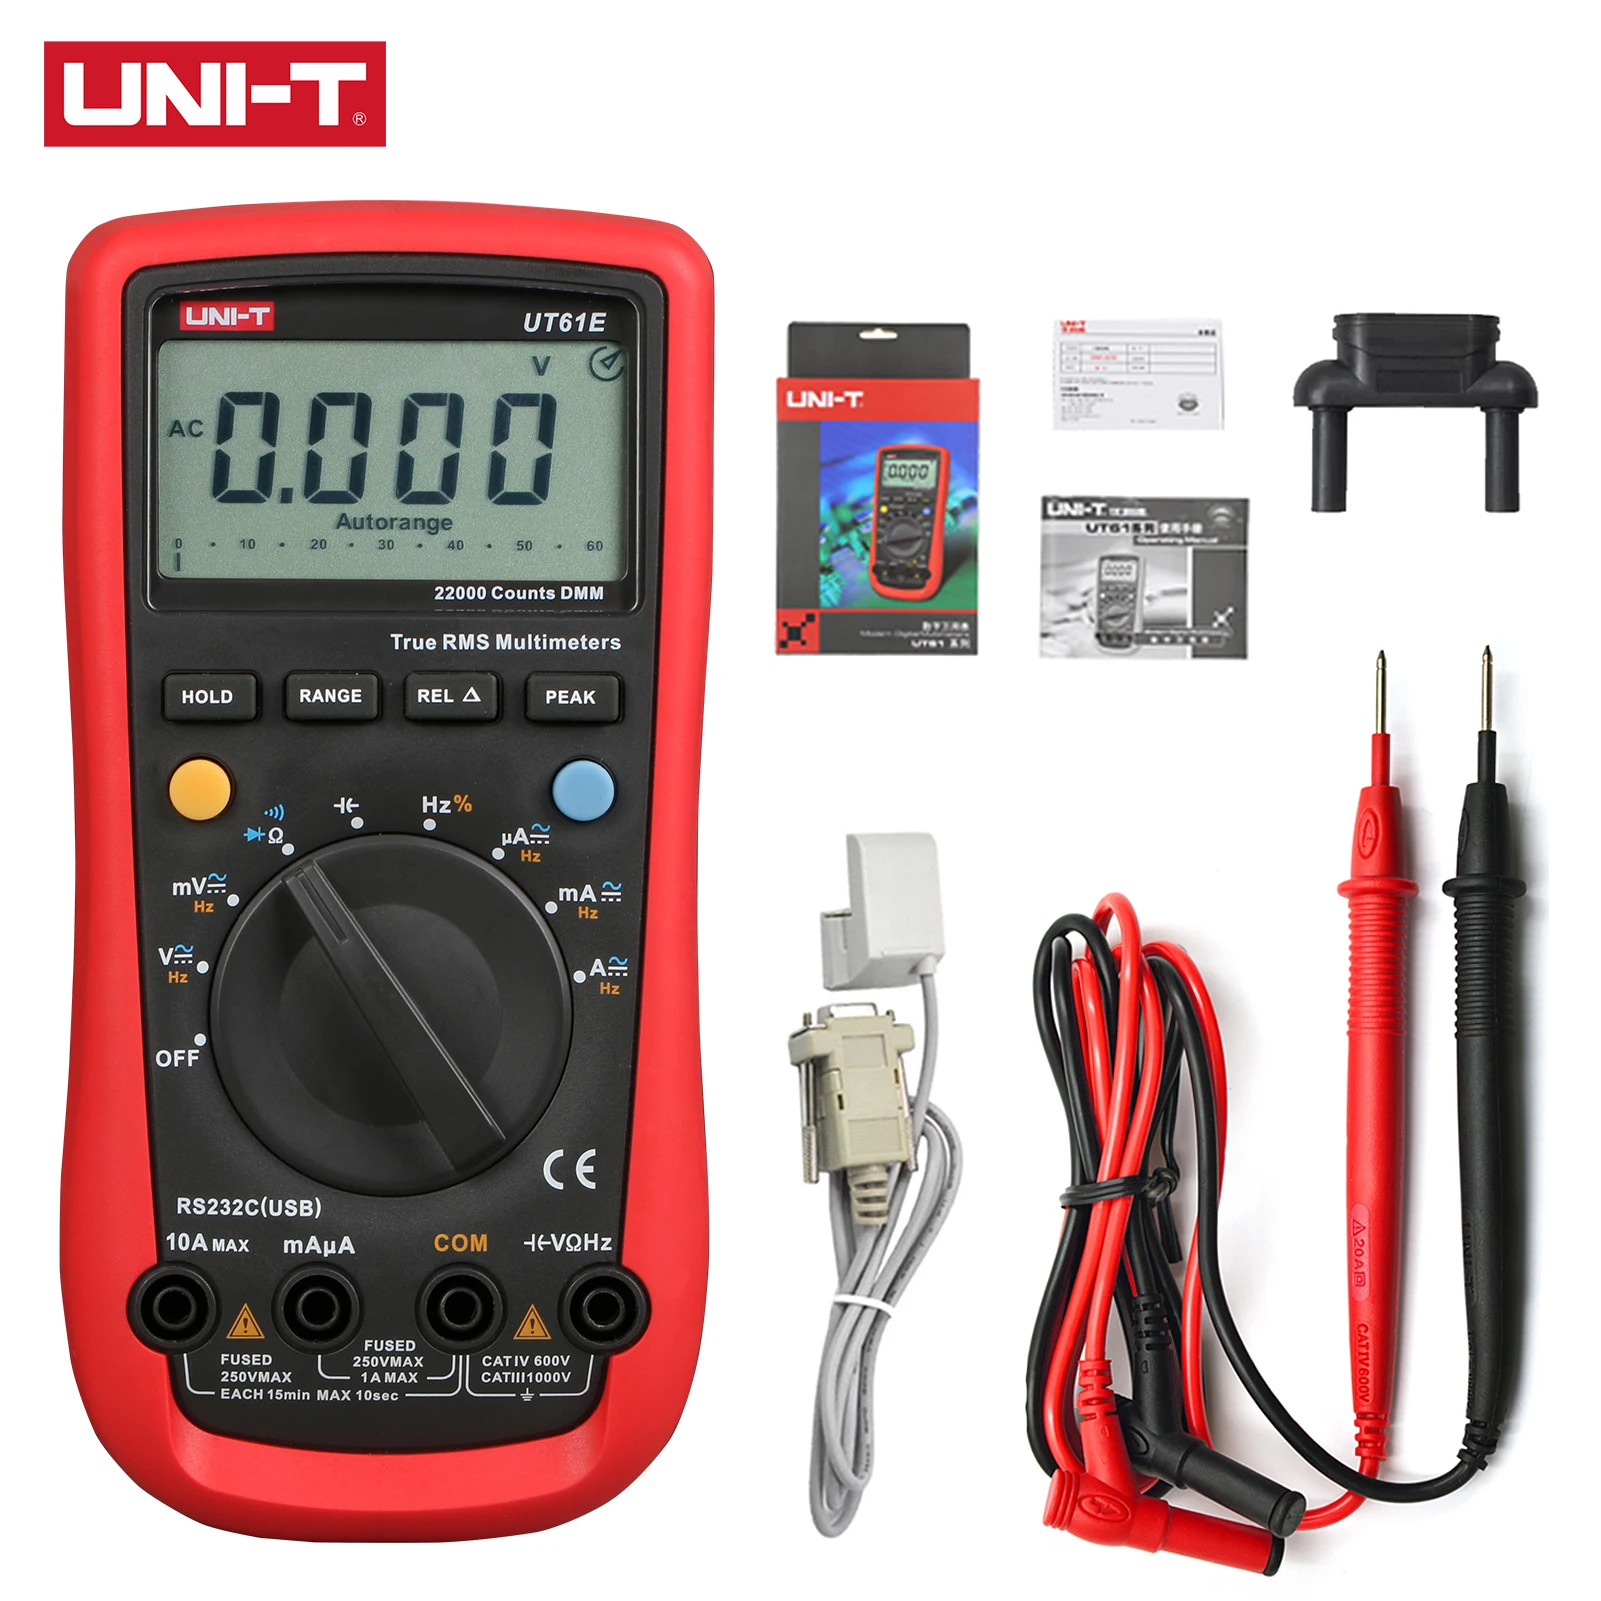 

UNI-T UT61E Digital Multimeter Meter True RMS High Precision 1000V AC DC Multimeter Voltage Tester Relative Mode 22000 Counts